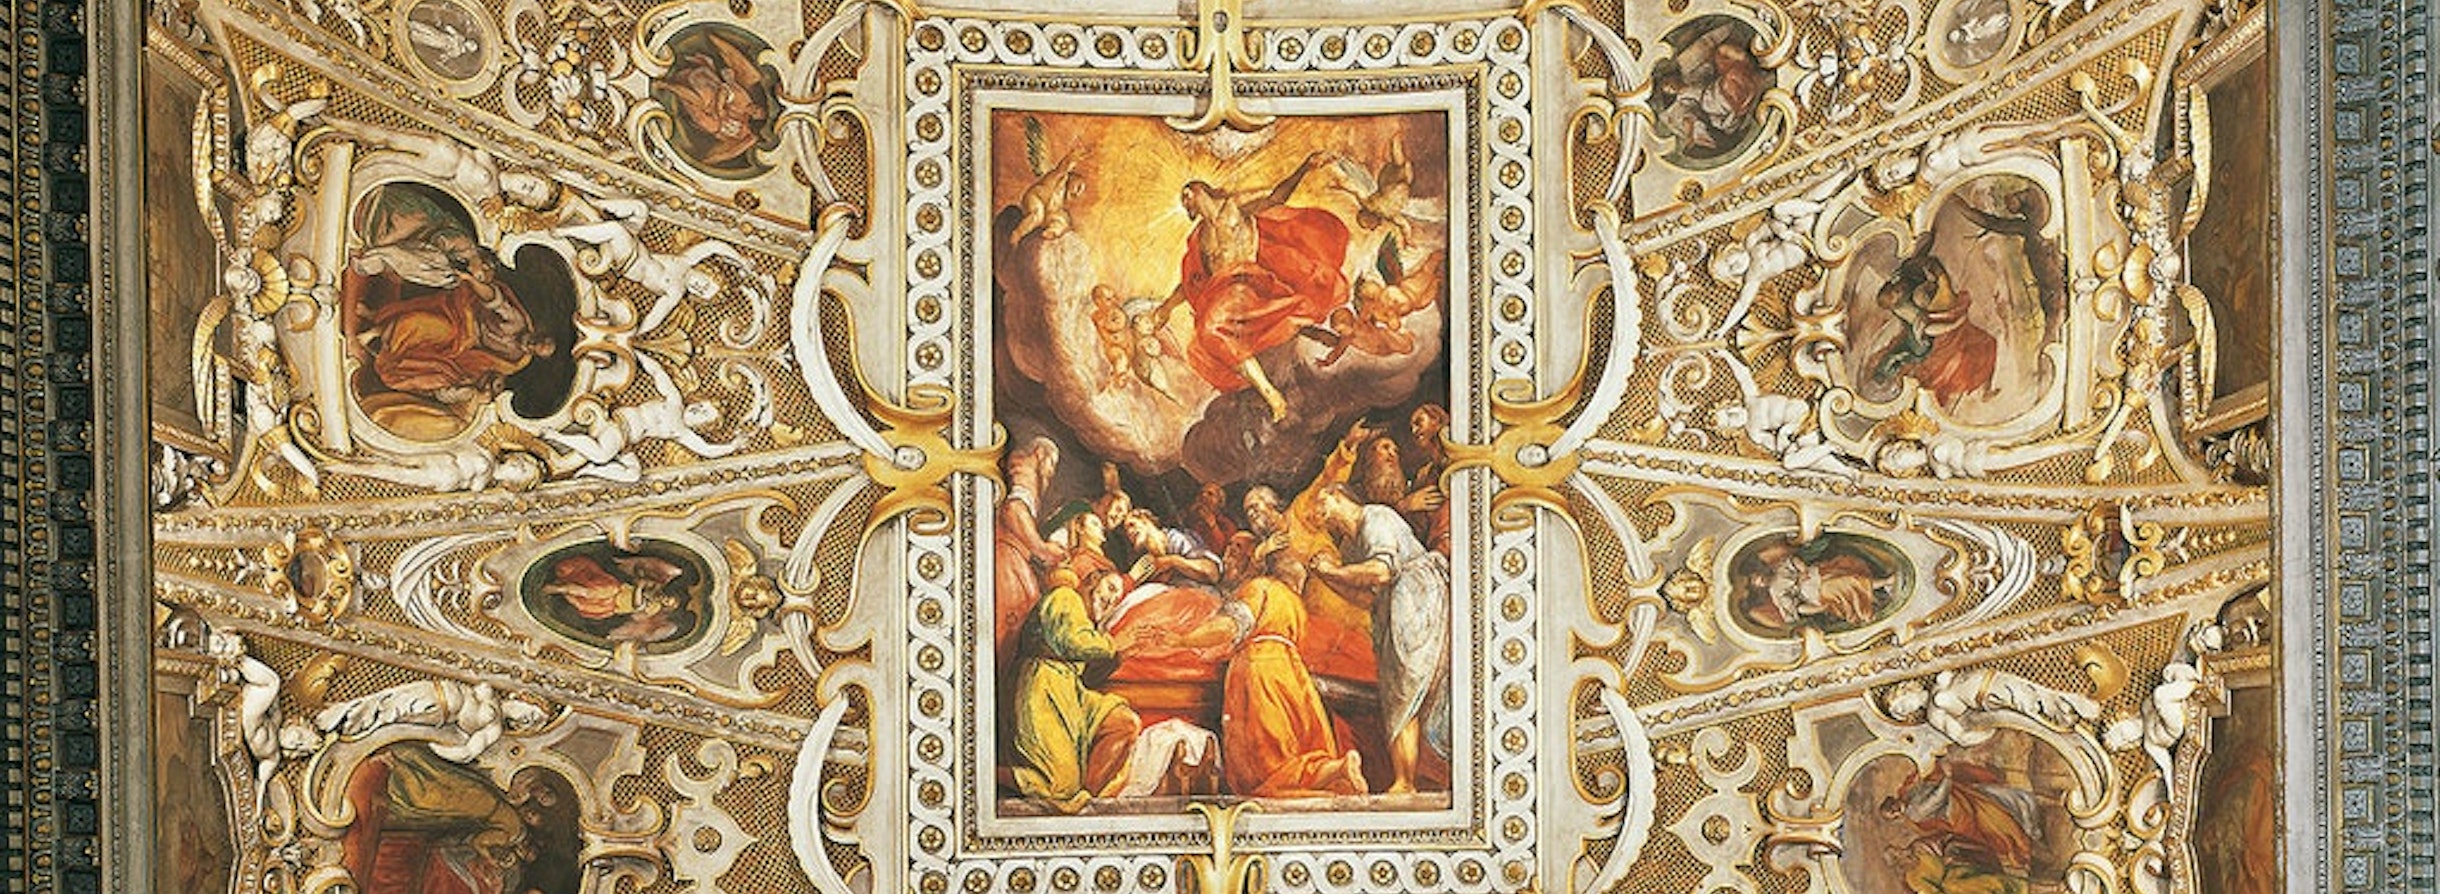 holy-places-chiesa-santa-maria-delle-grazie-brescia-flos-03-1440x840-1